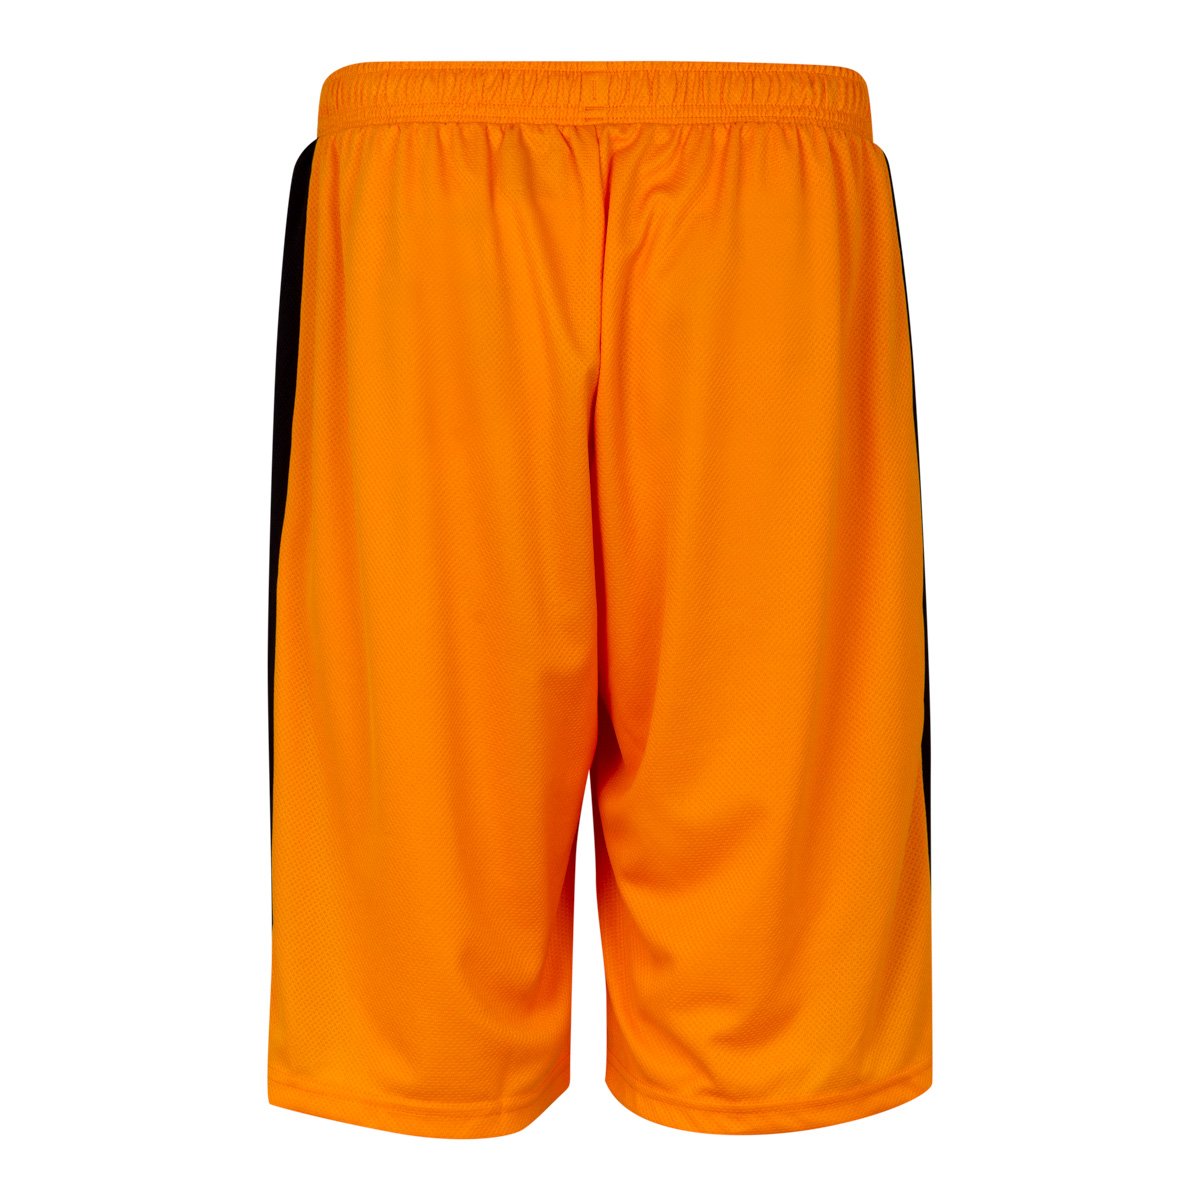 Pantalones cortes Basket Caluso Naranja Niños - Imagen 2